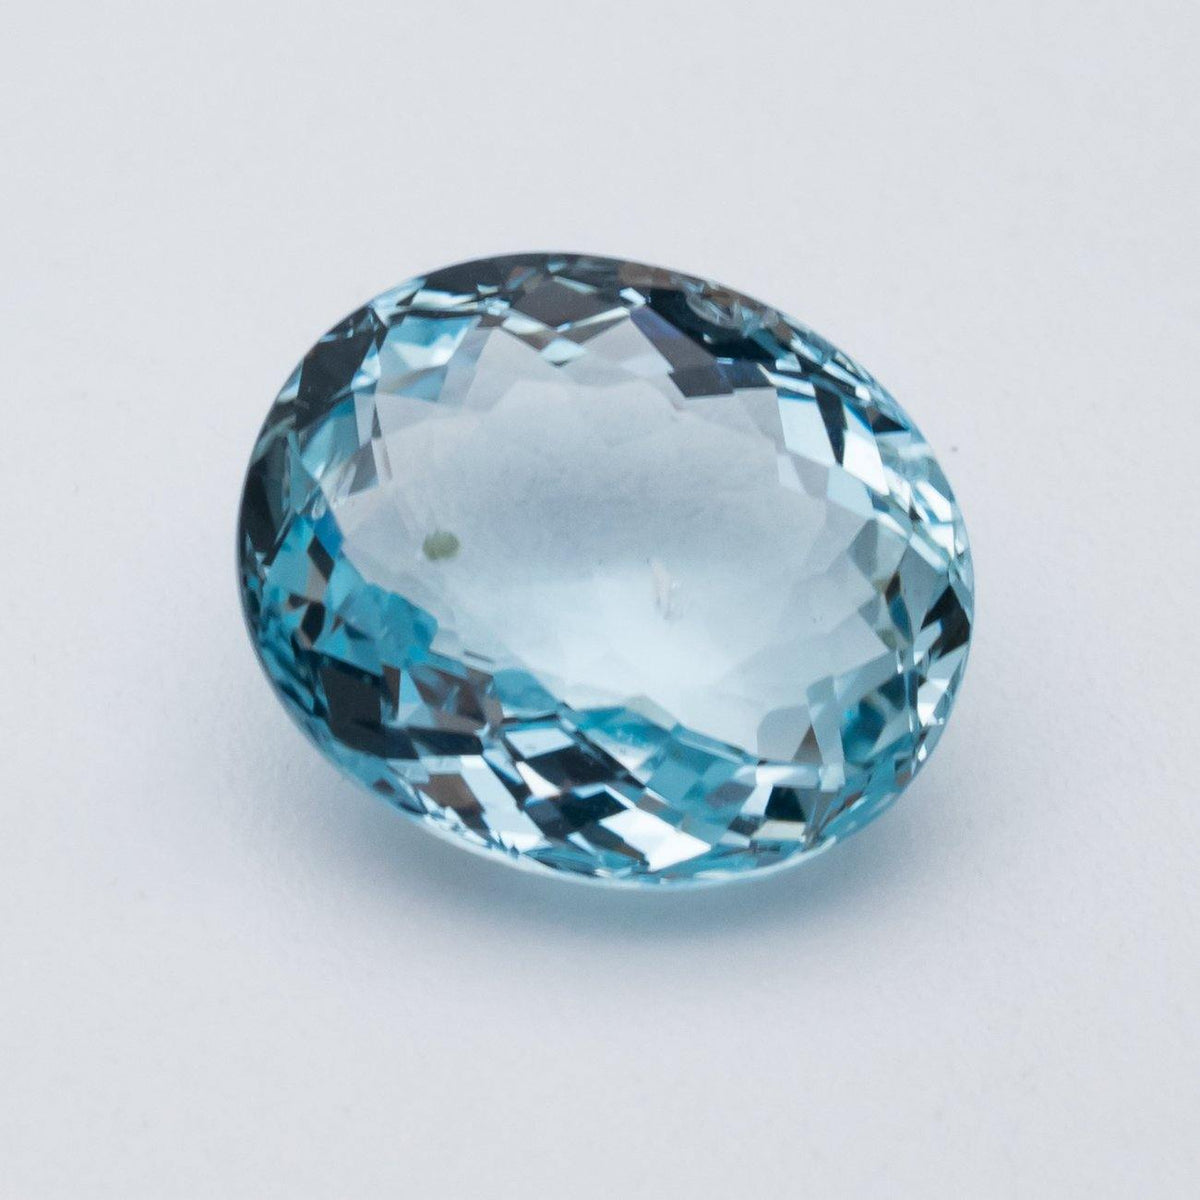 3.73 Carats Blue Natural Aquamarine Genuine Gemstone Oval Cut - Modern Gem Jewelry 